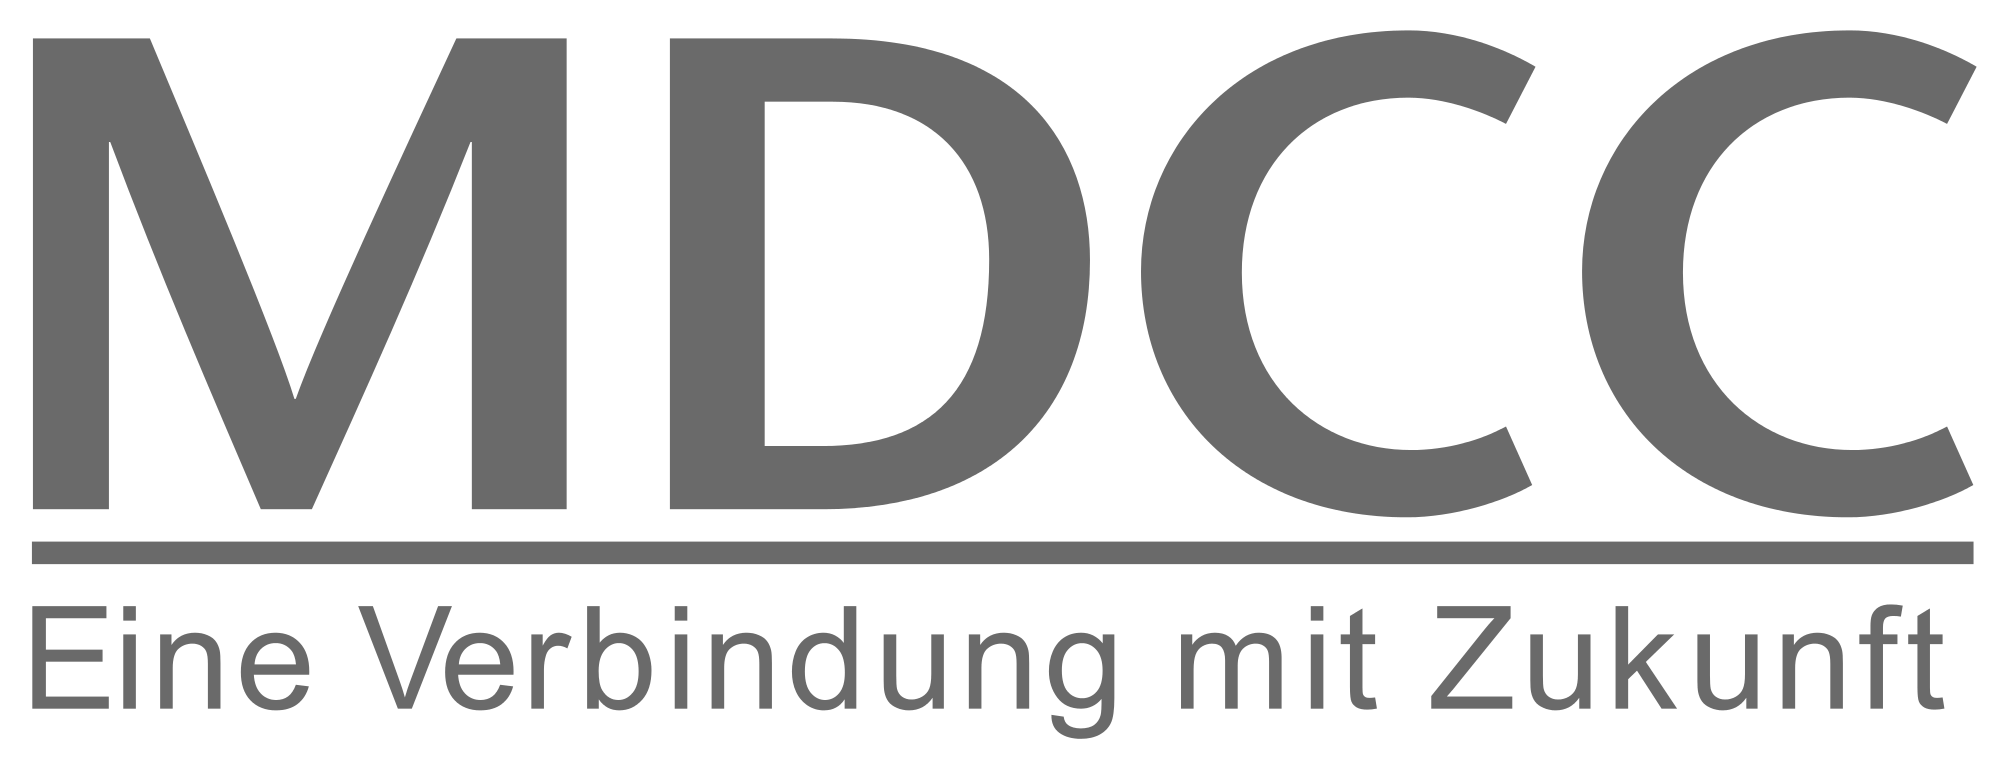 Logo MDCC